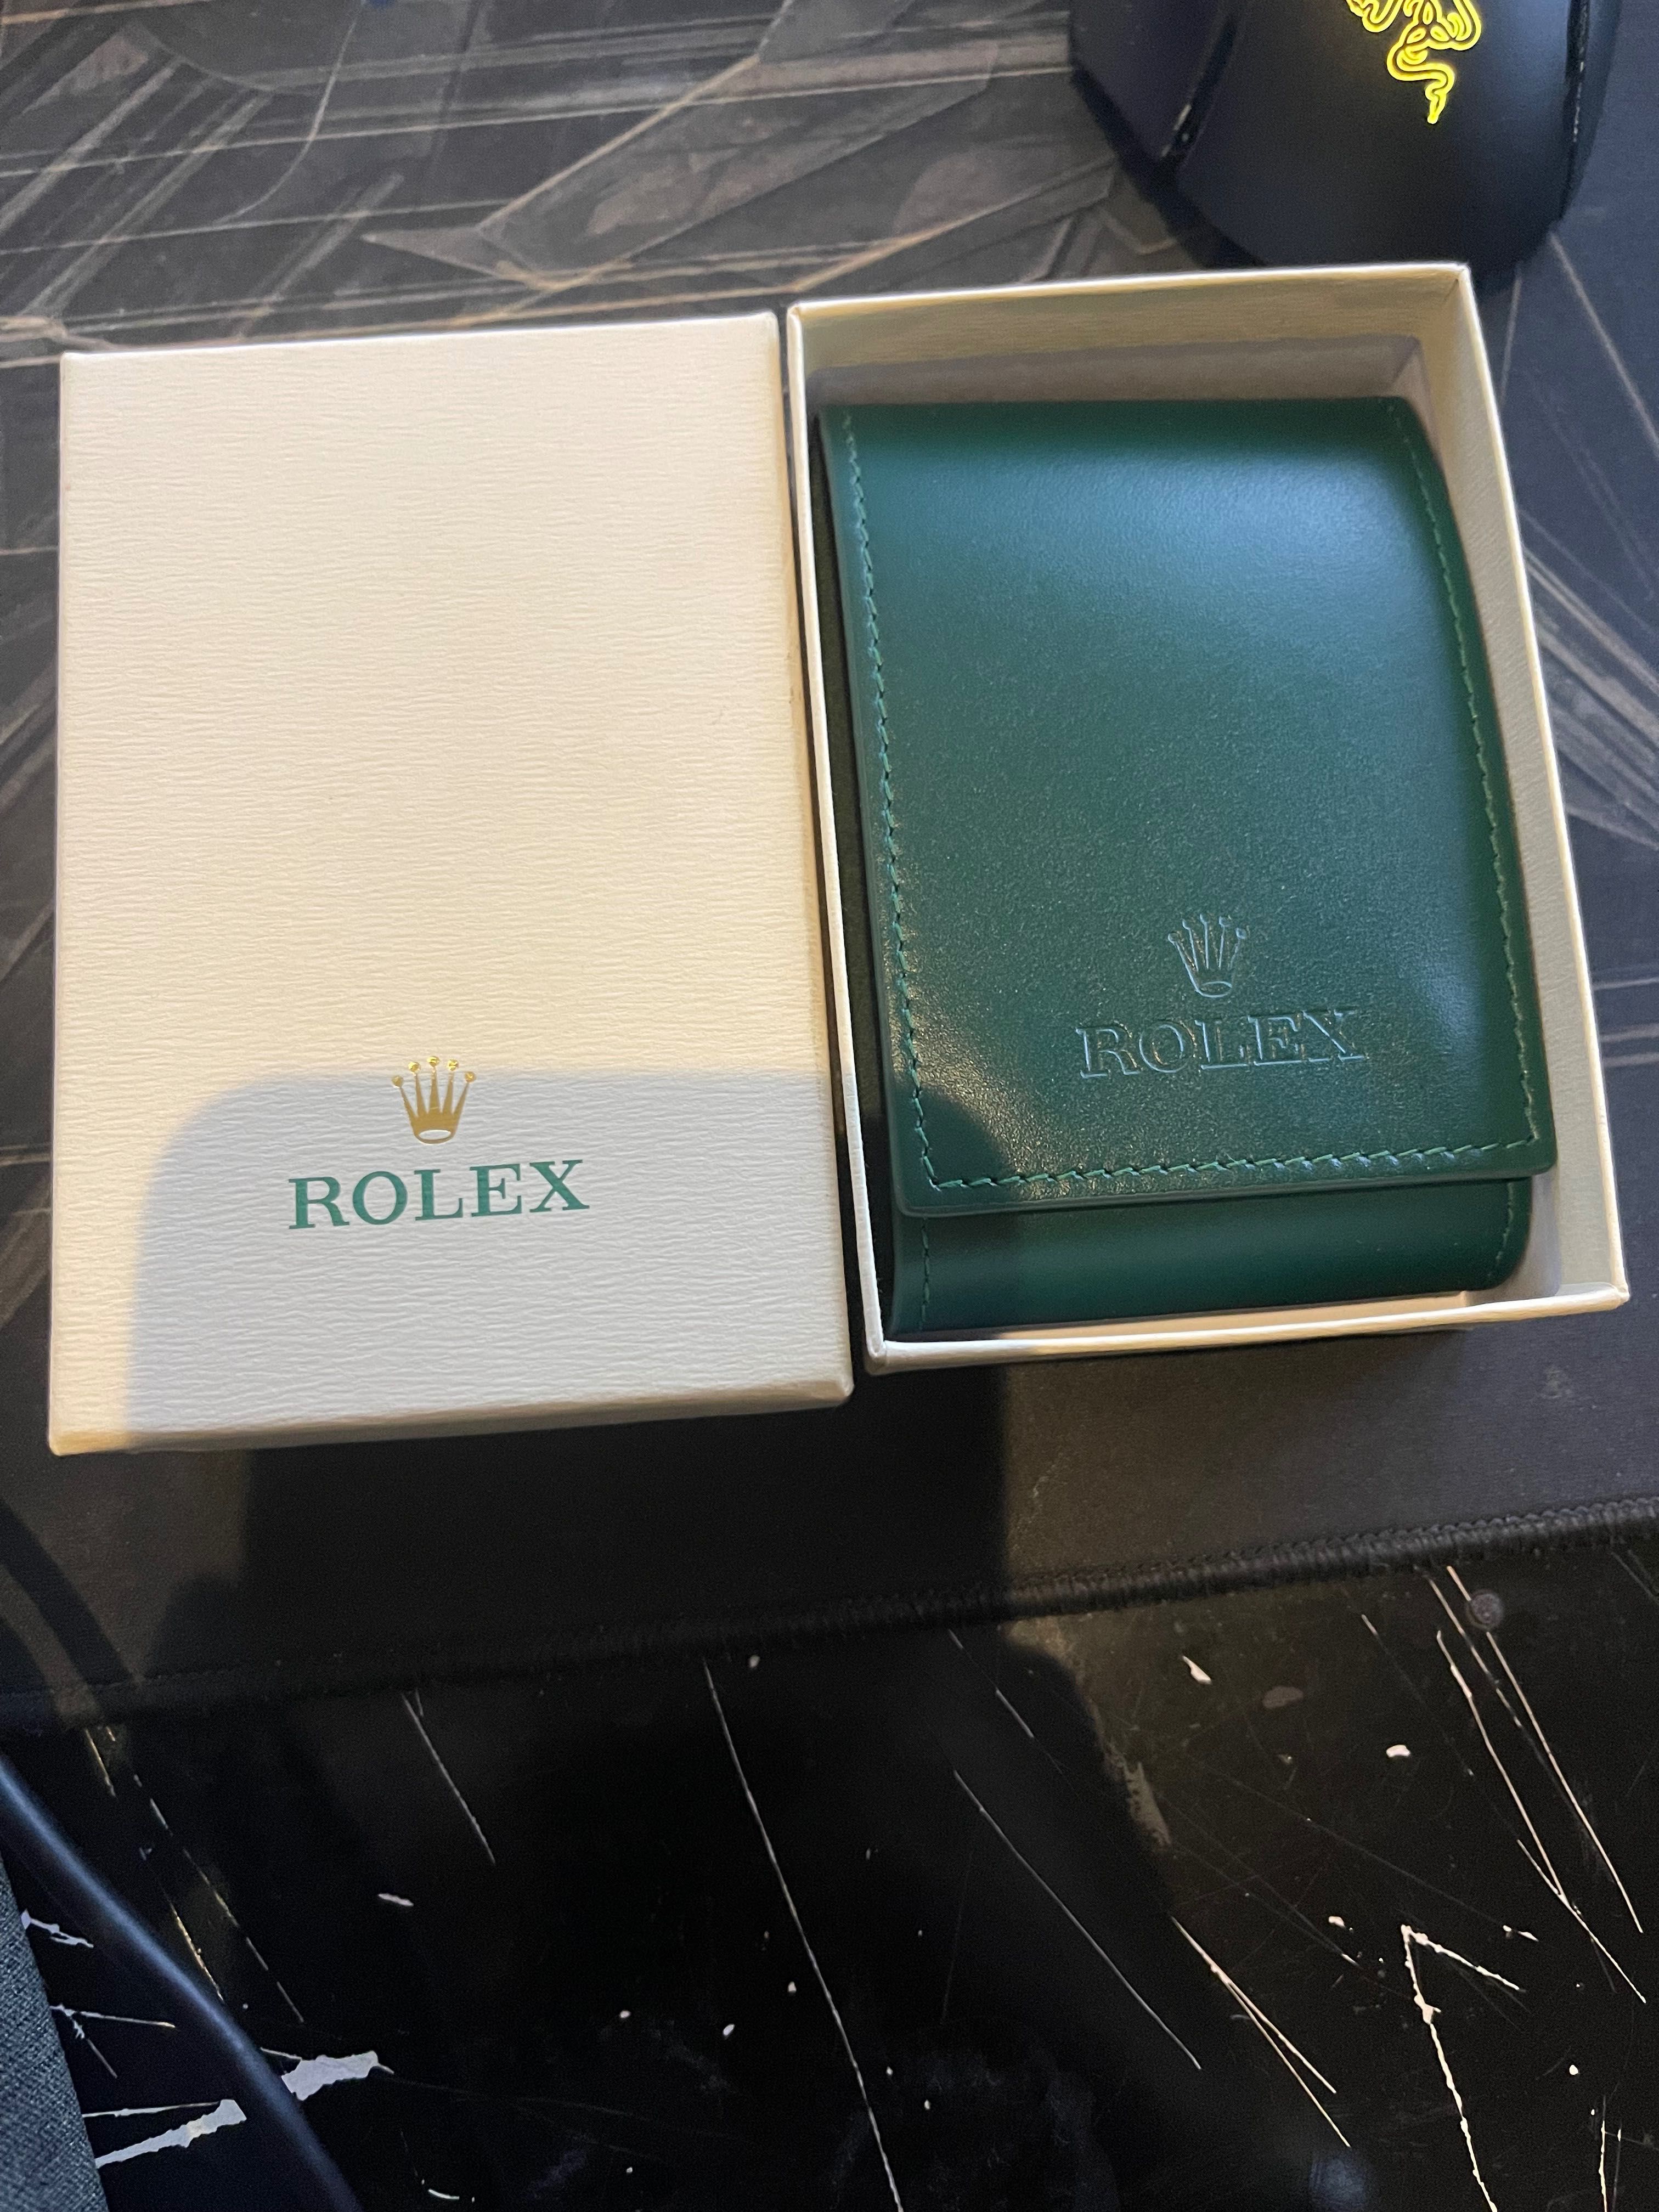 Rolex service box original